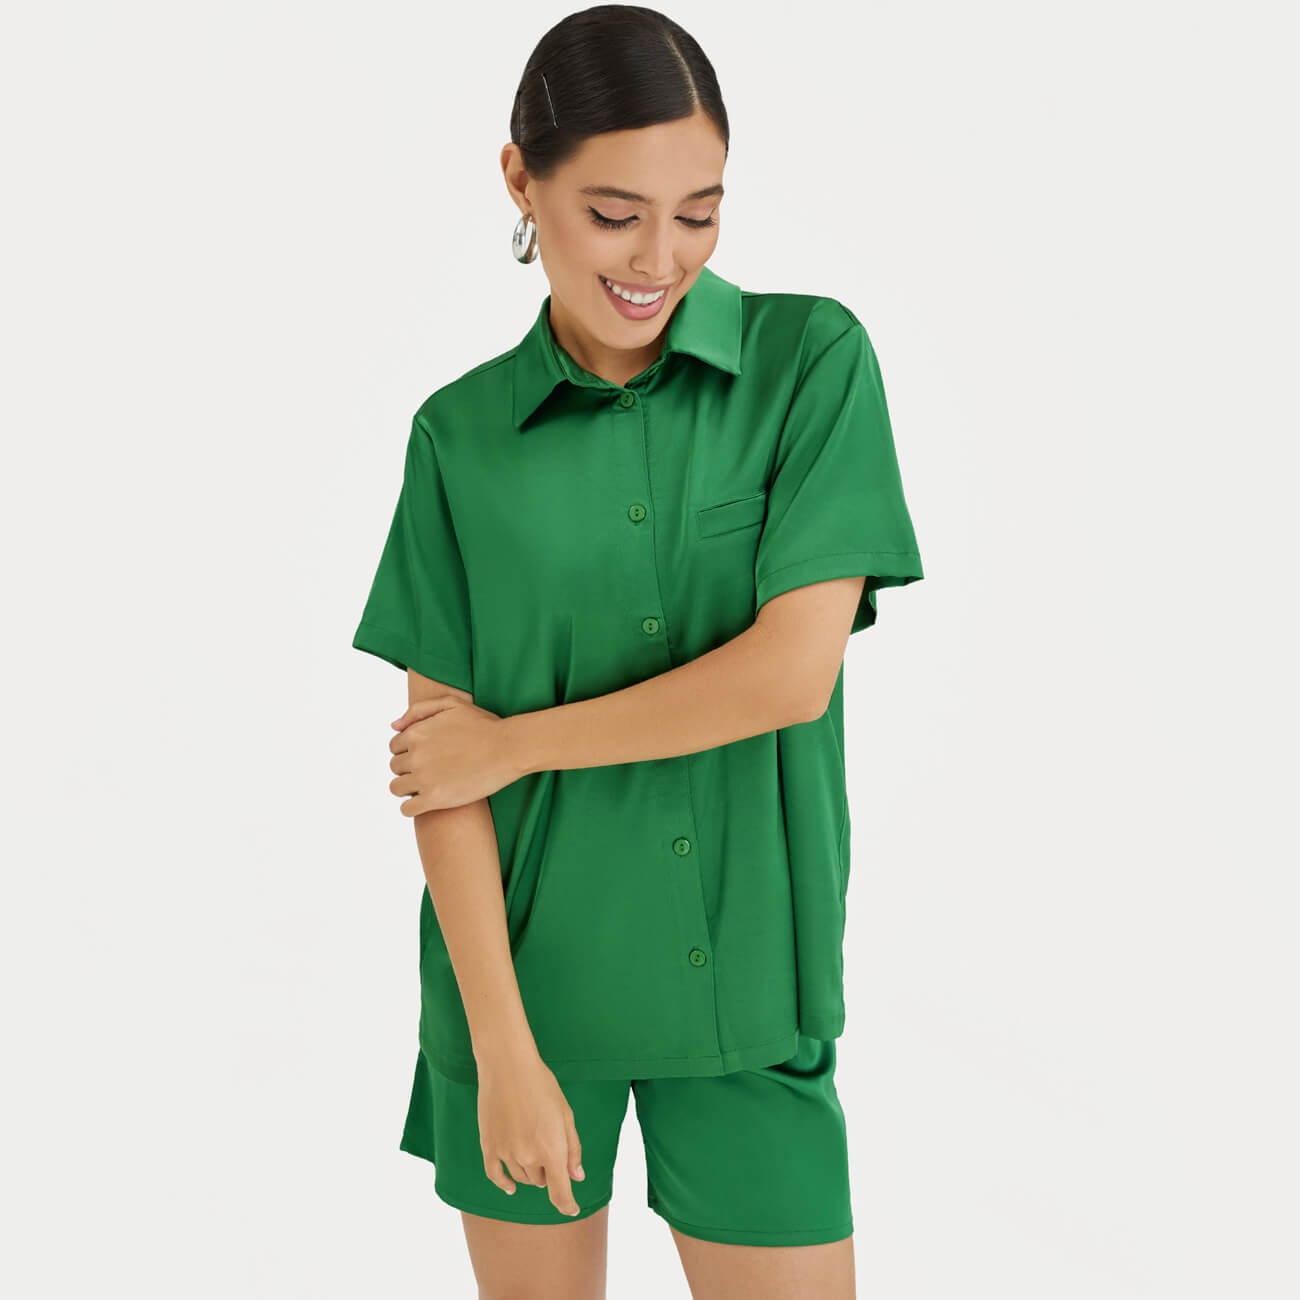 Рубашка женская, р. XL, с коротким рукавом, полиэстер/эластан, зеленая, Madeline рубашка женская домашняя р m с коротким рукавом полиэстер эластан серая ирисы mary